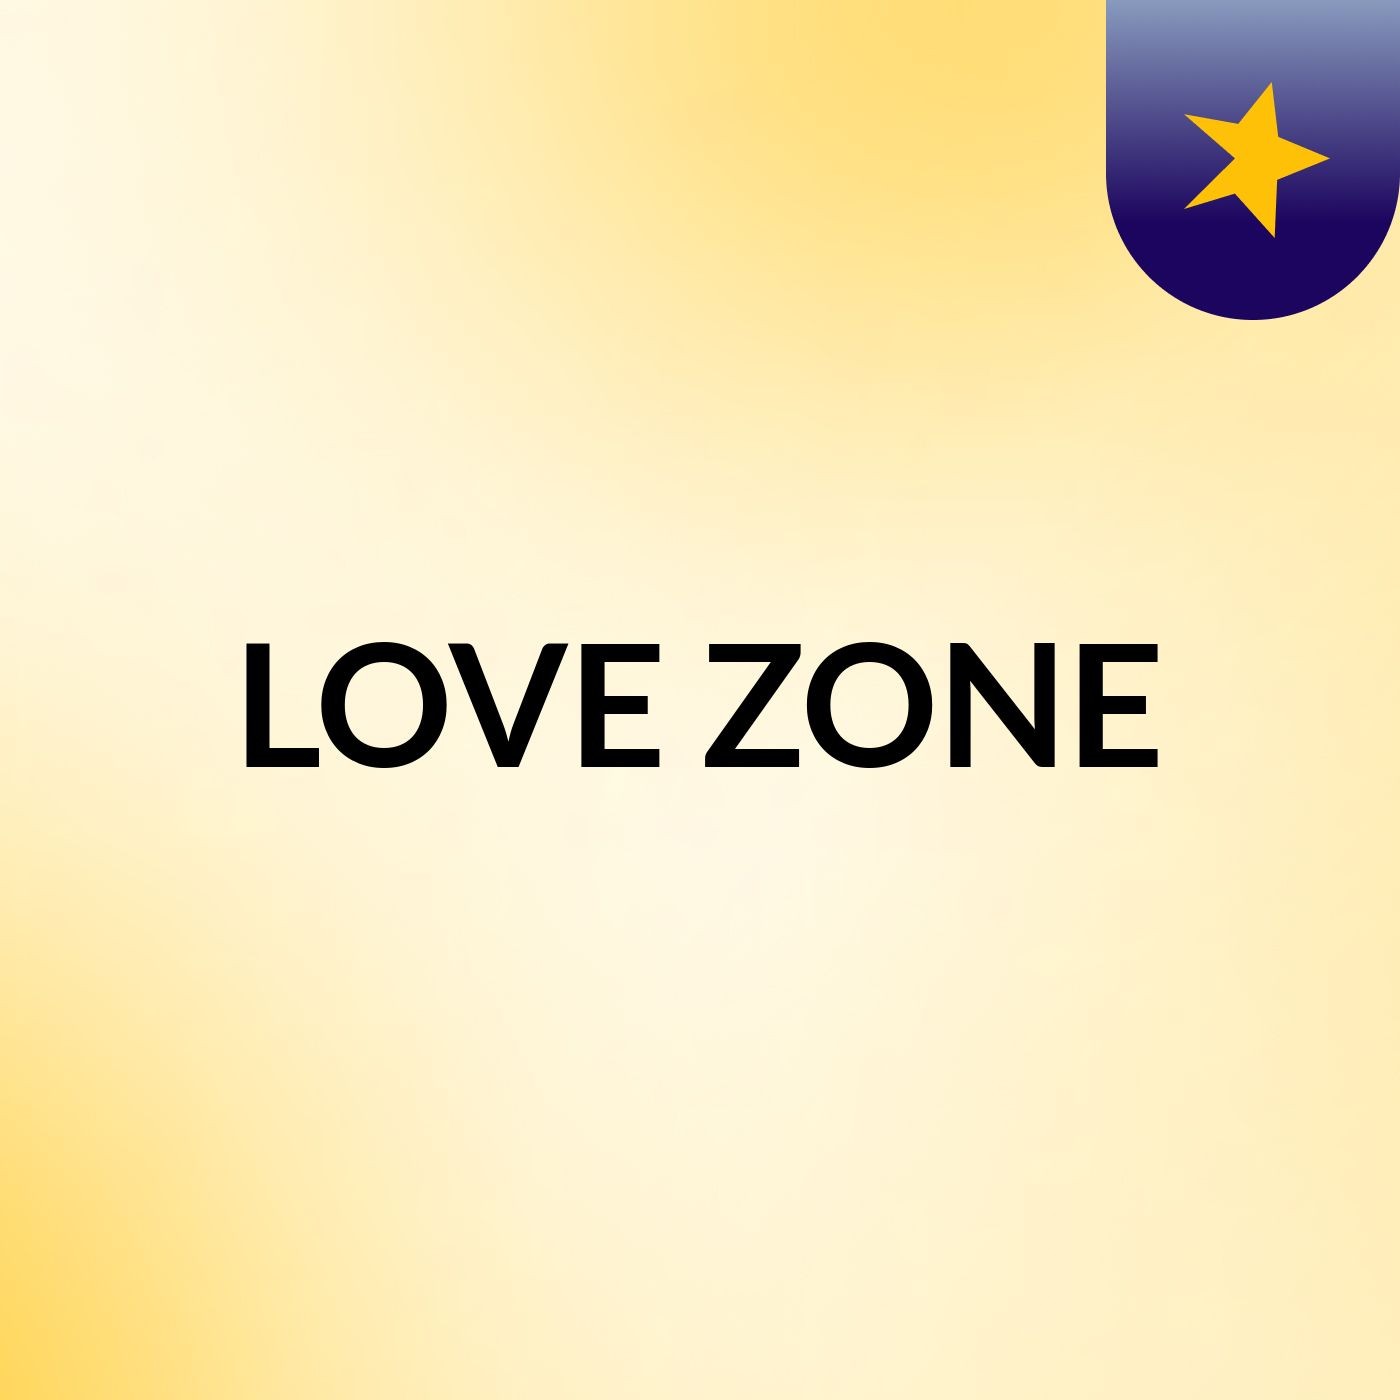 LOVE ZONE